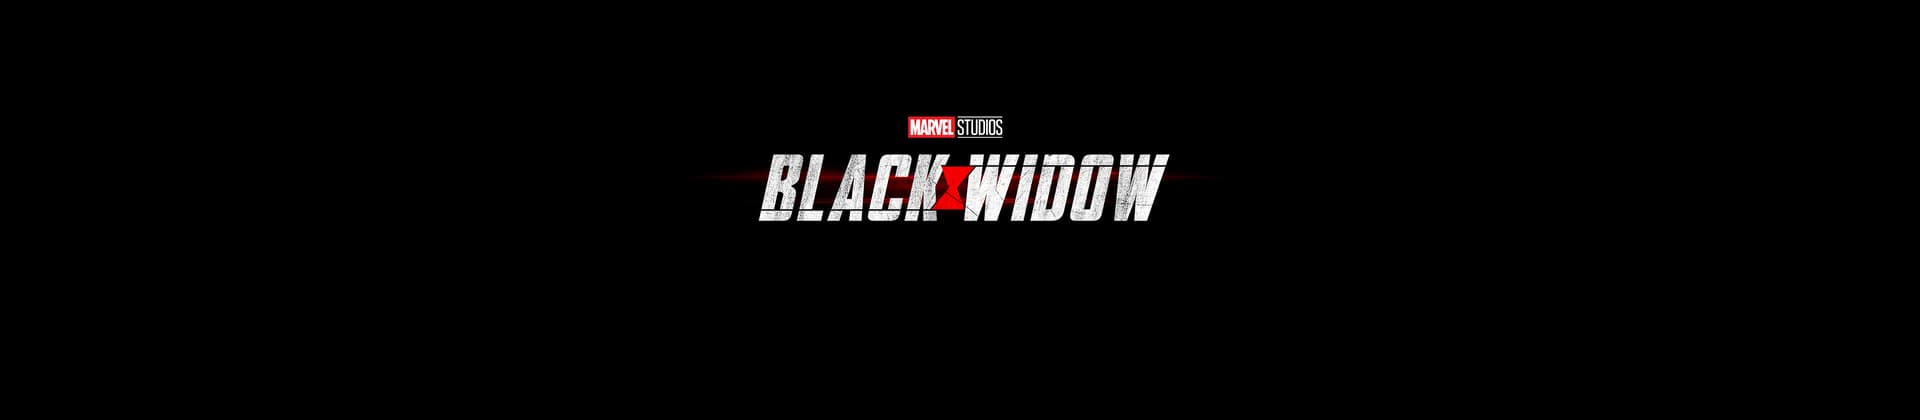 Black Widow Movie Logo On Black